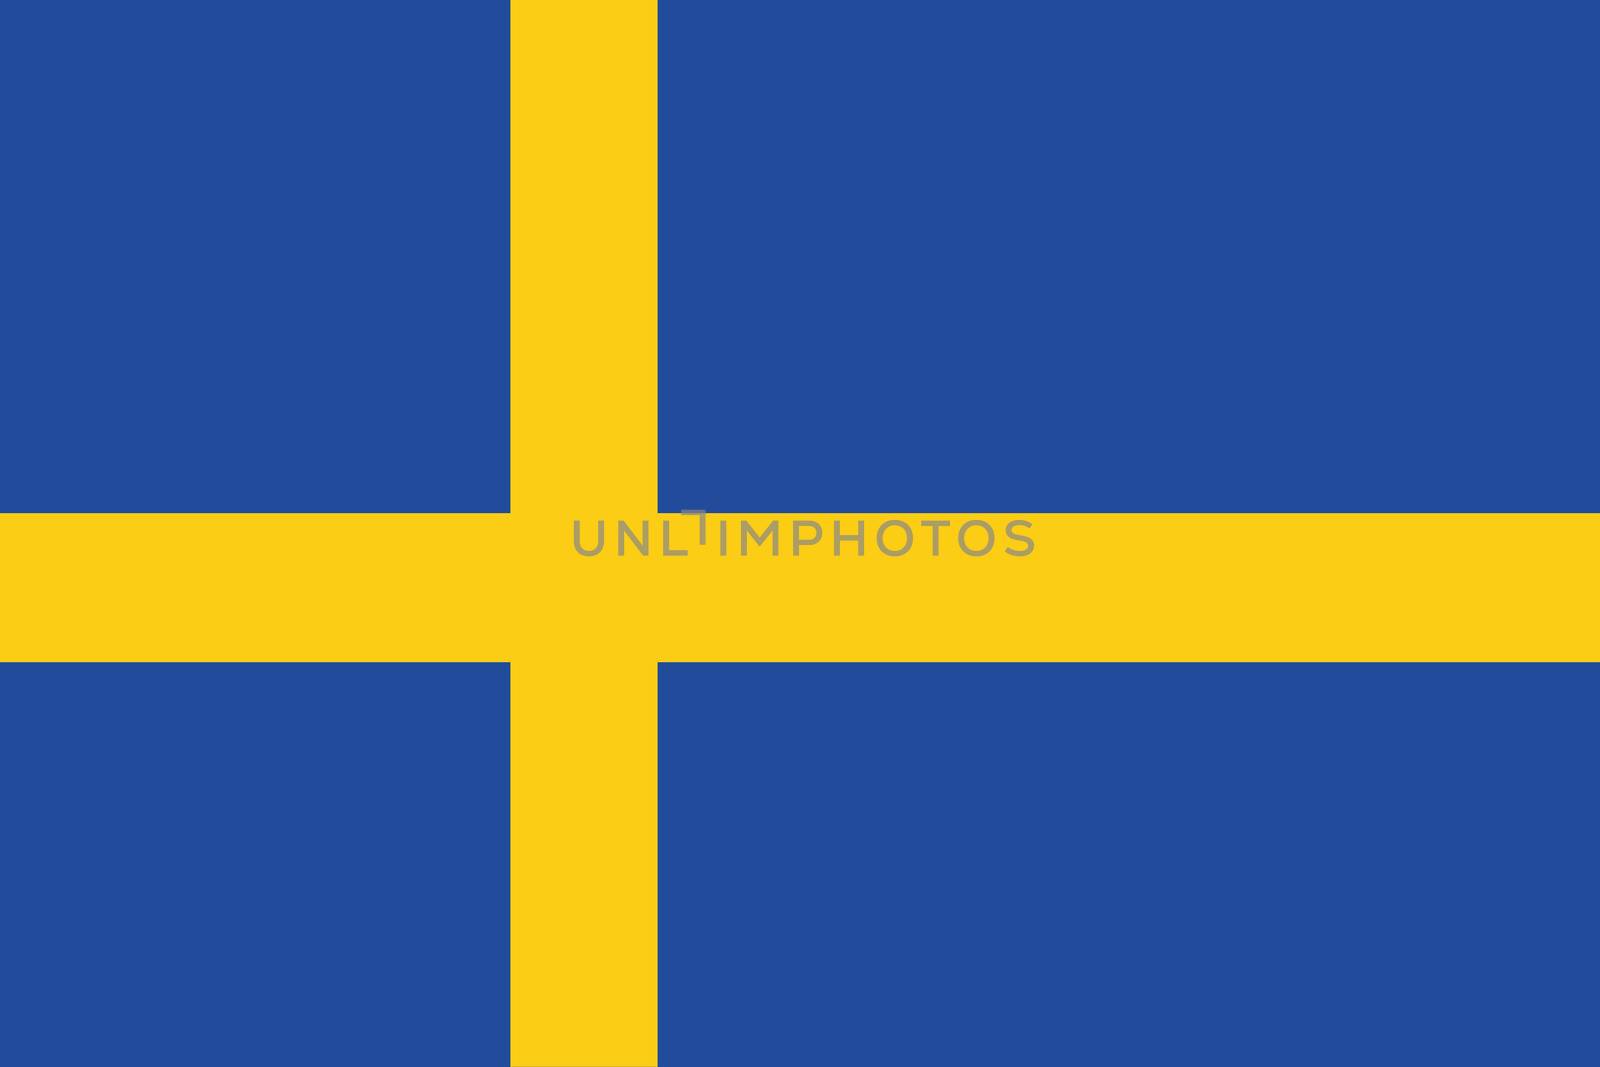 An illustration of the flag of Sweden